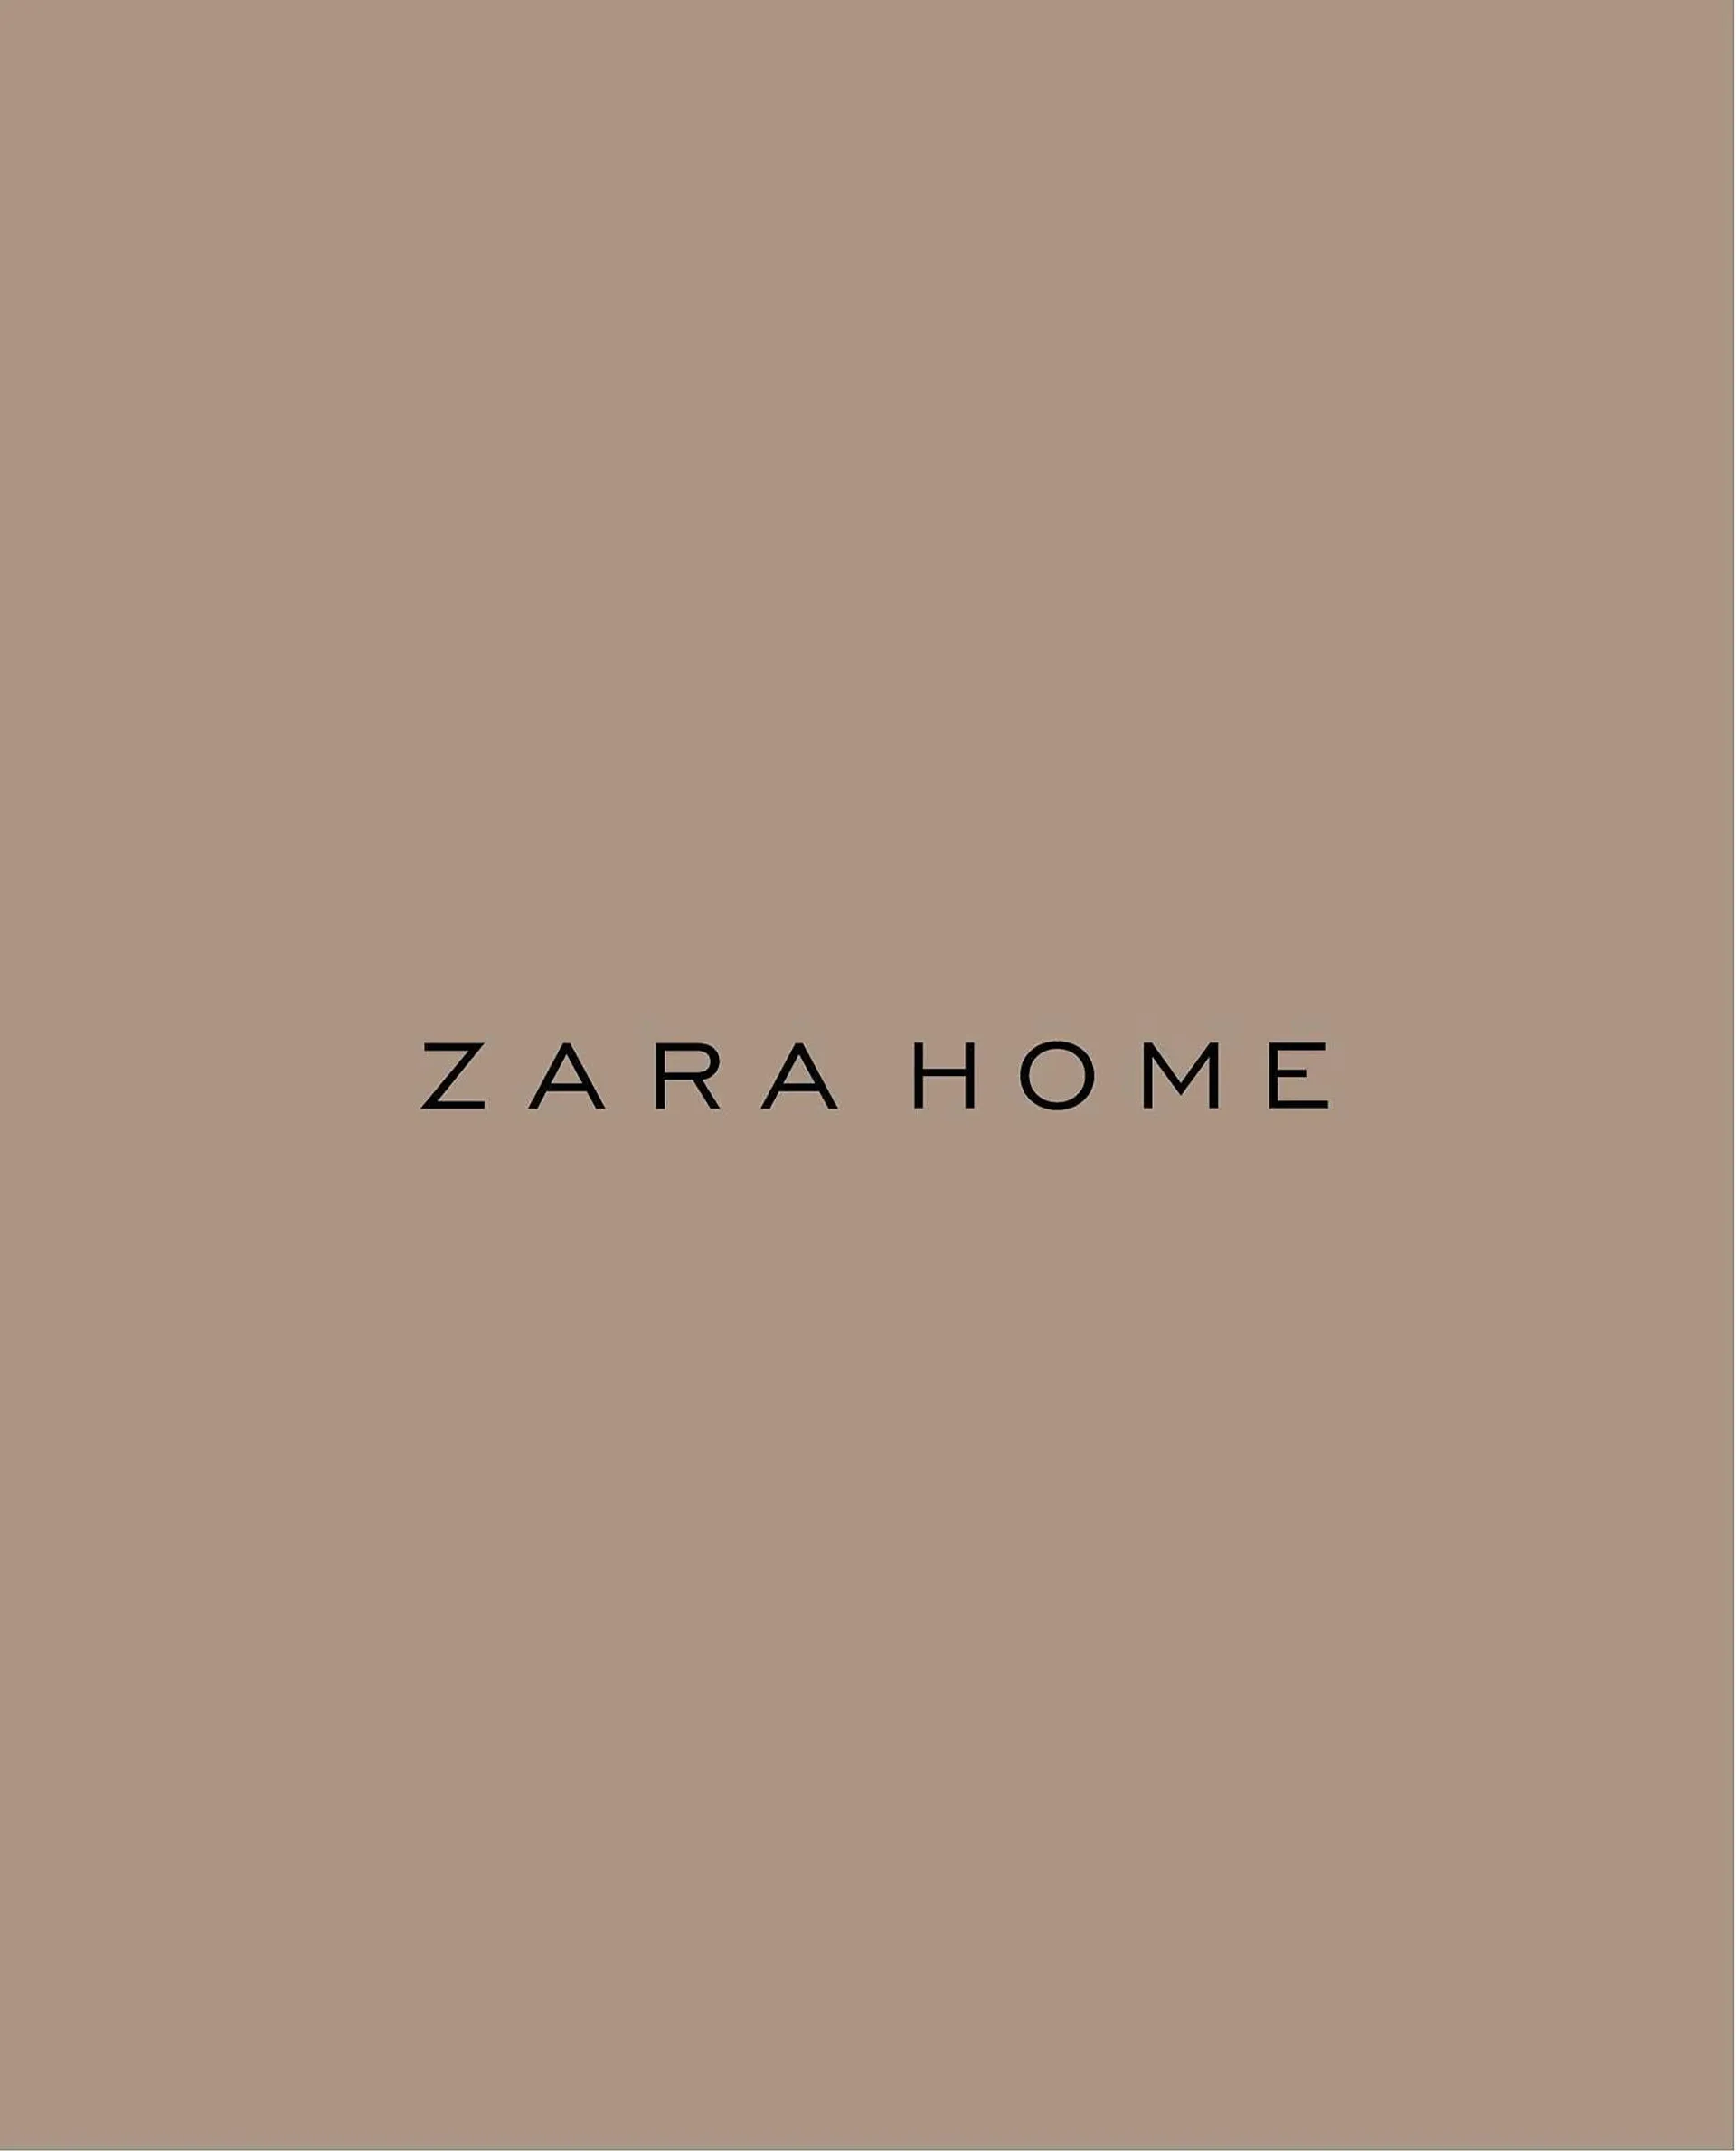 ZARA HOME flyer - 12